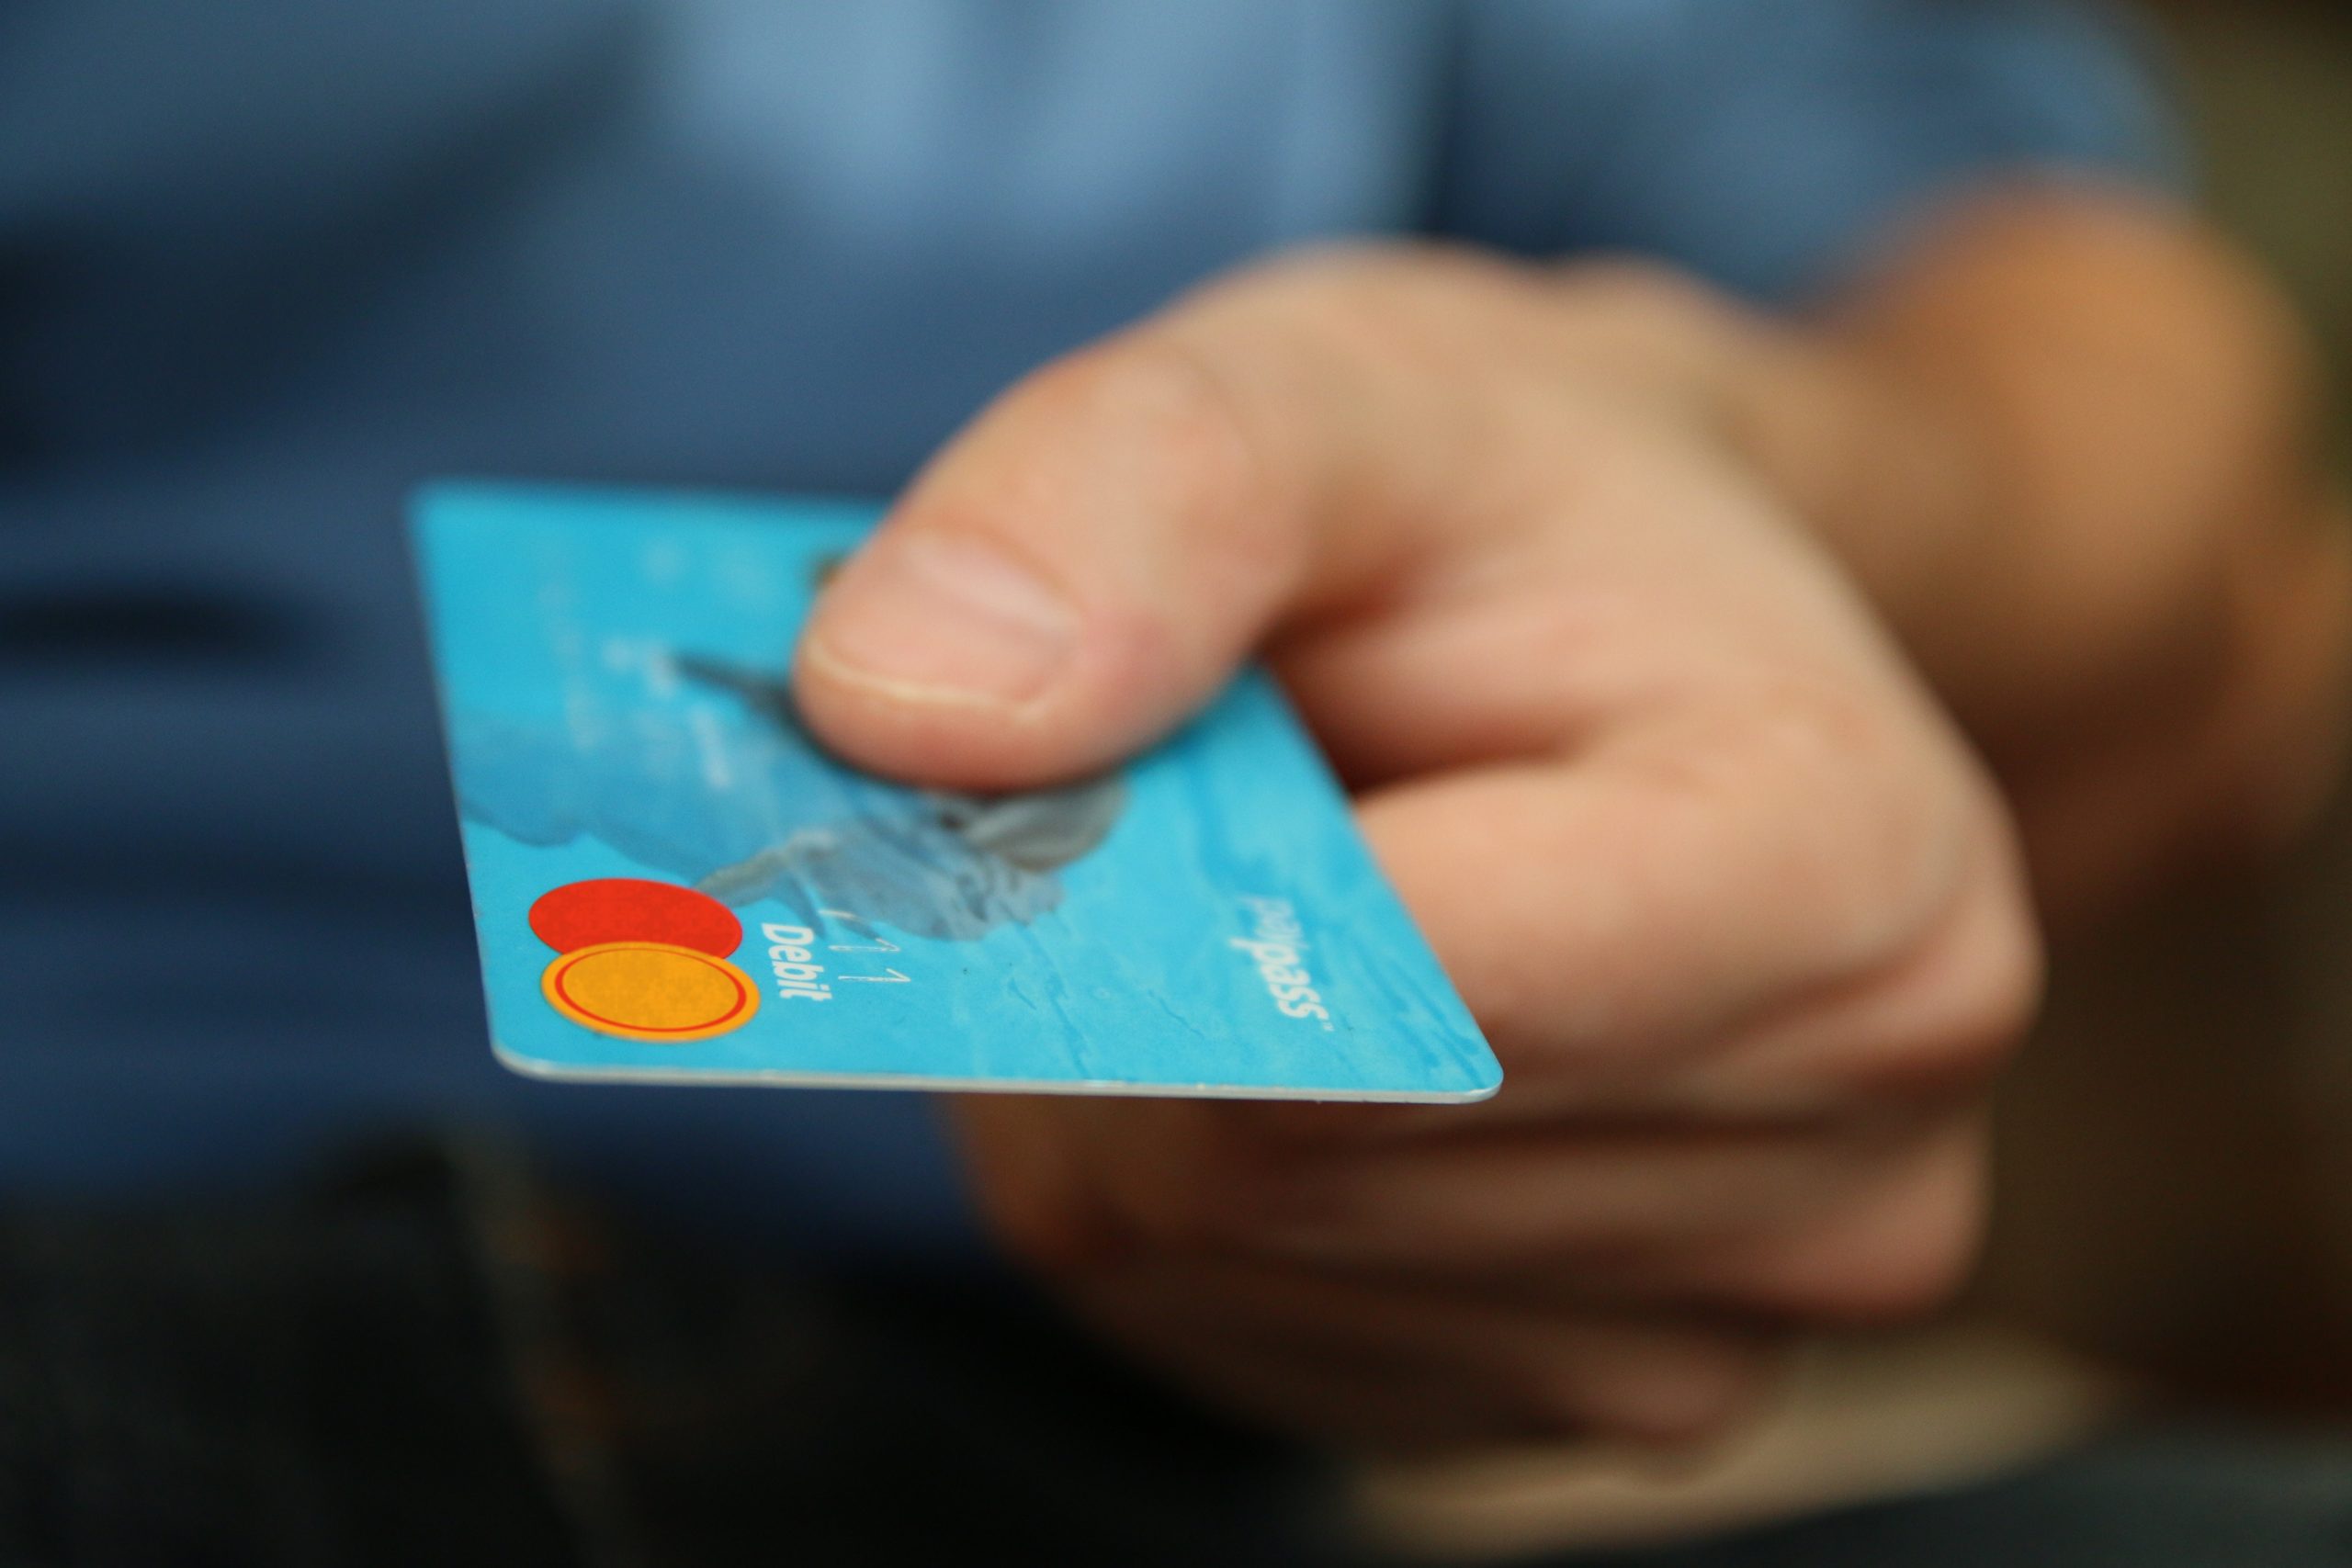 Salary in Croatia: image of a credit card